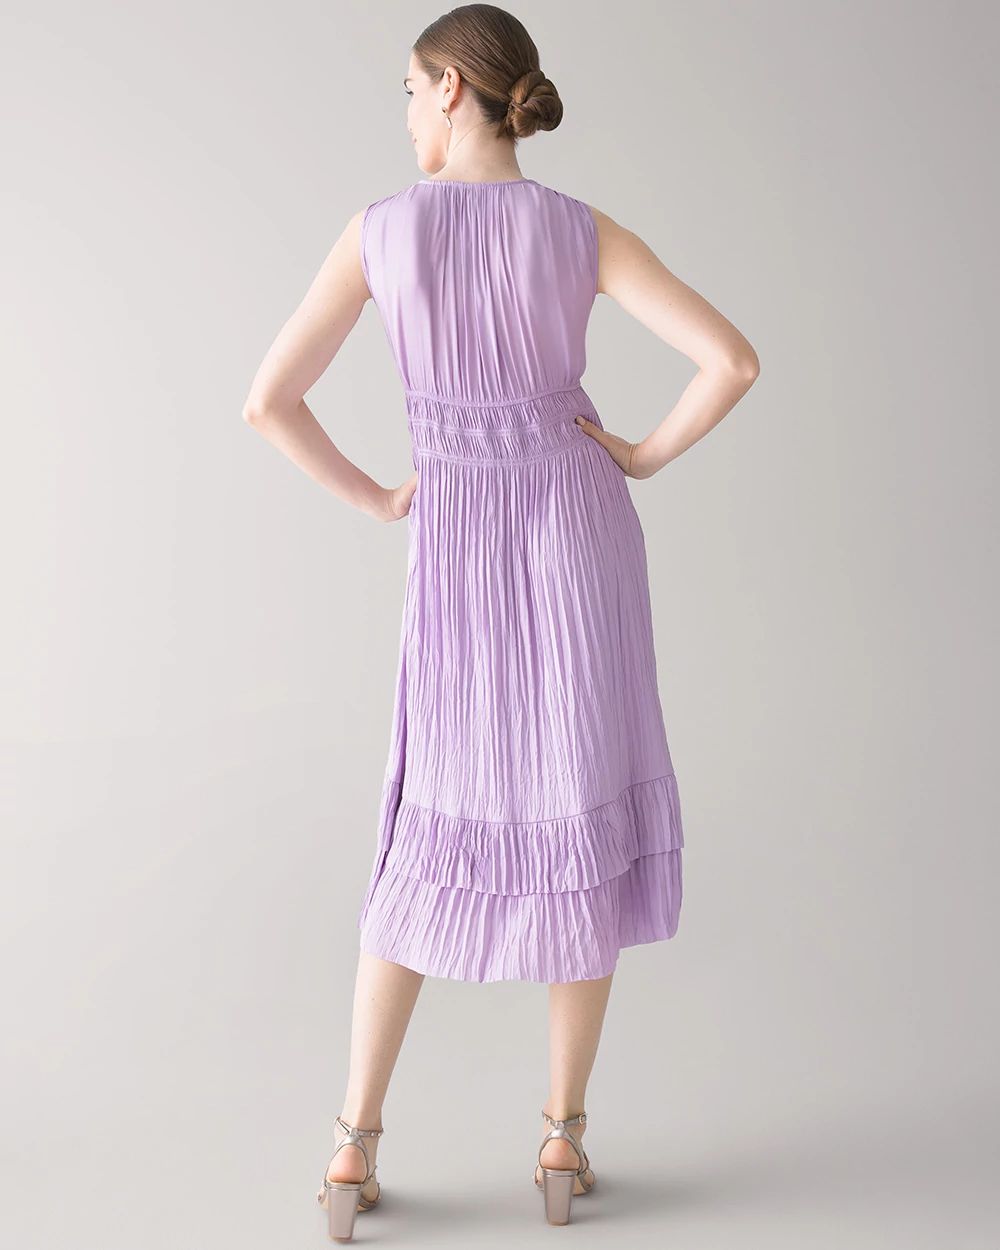 Petite Sleeveless Satin Pleated Midi Dress click to view larger image.